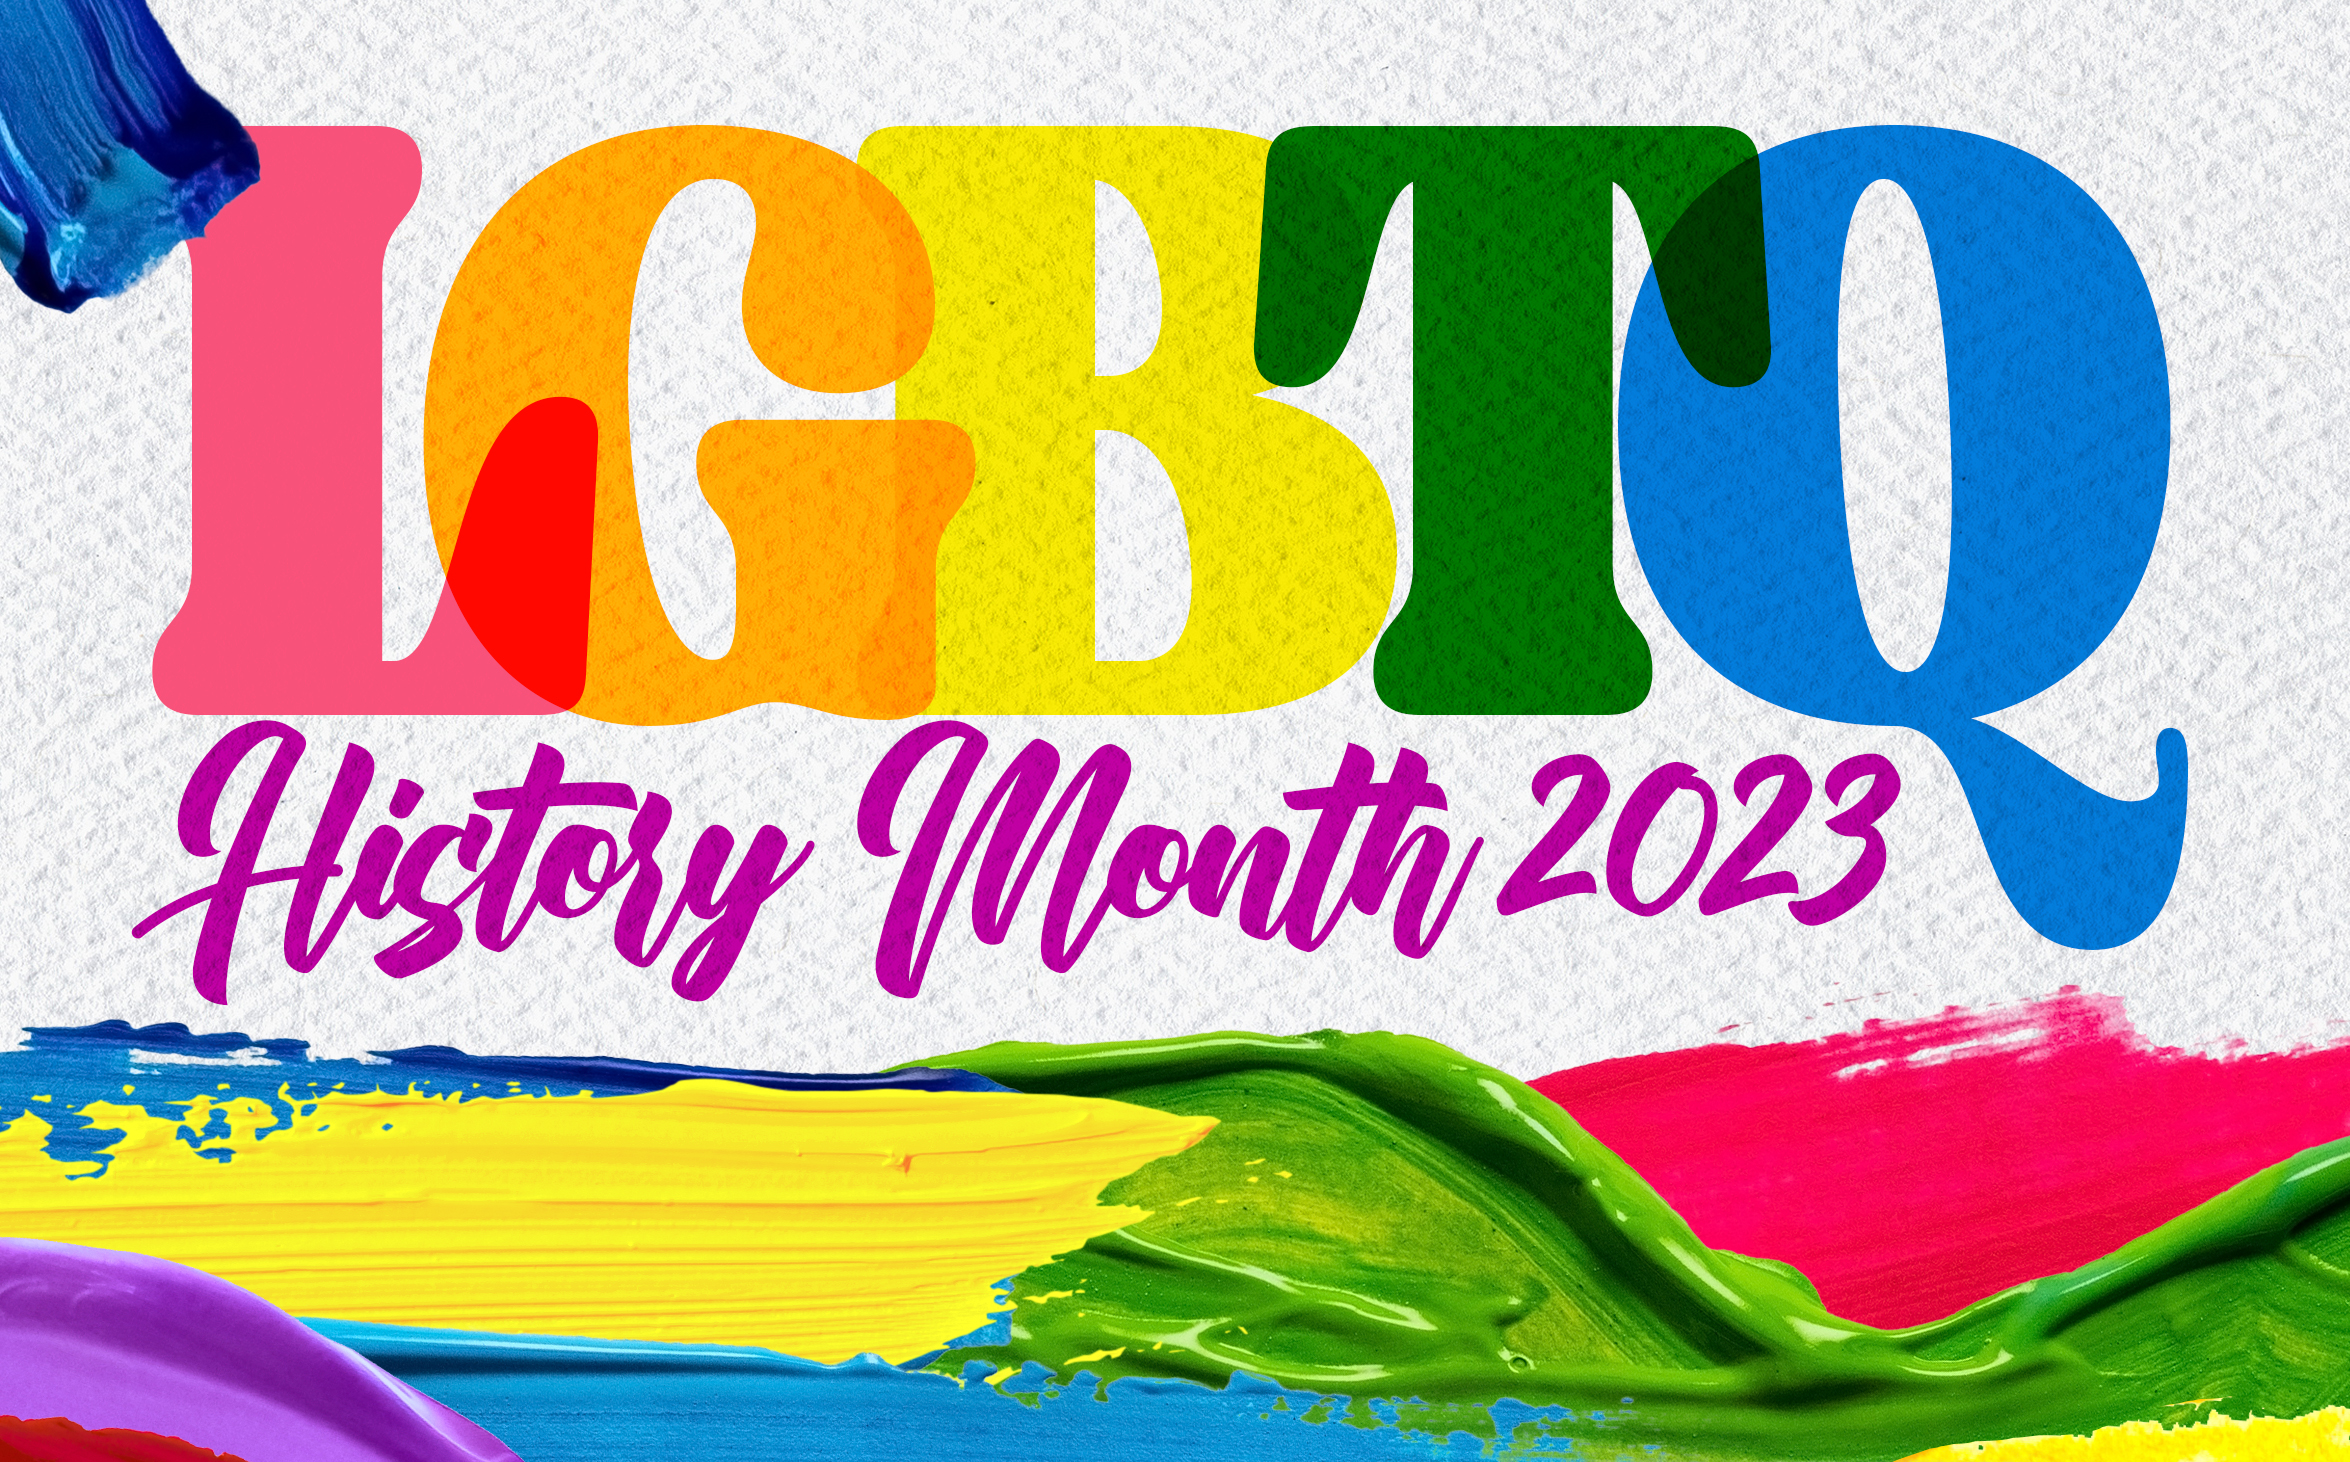 LGBTQ_History Month graphic